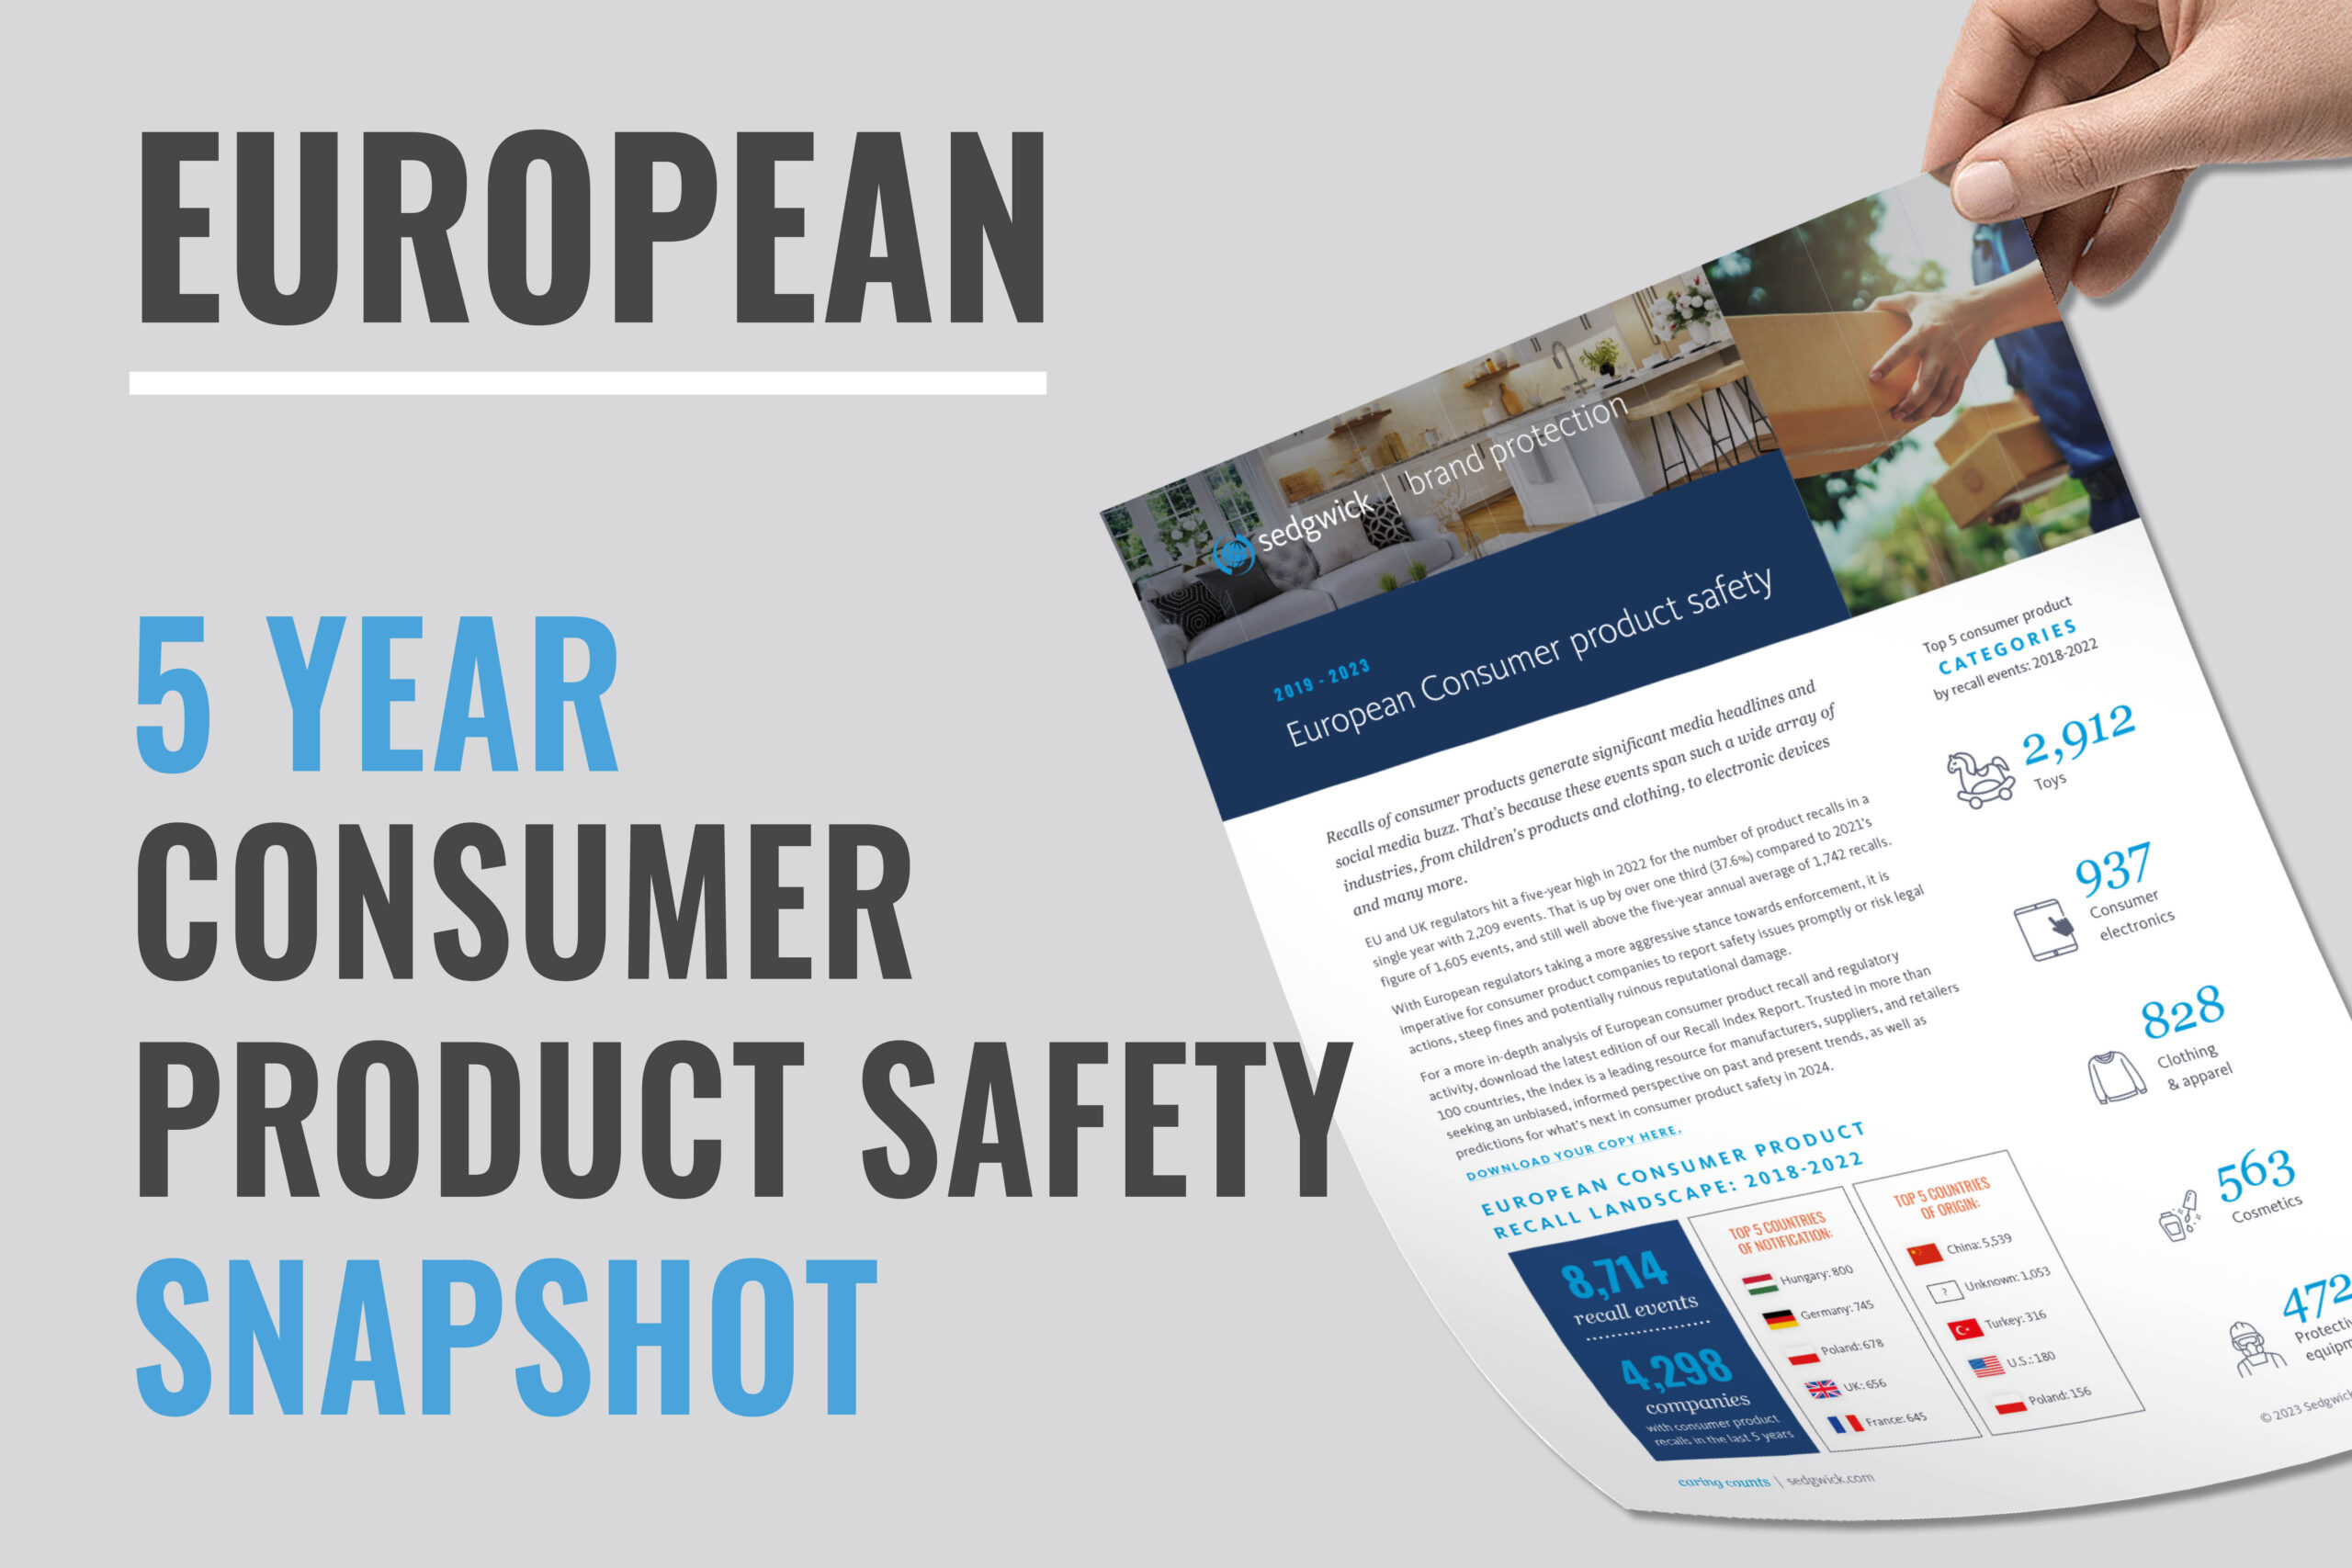 European Consumer Product Safety and Recall Insights - Descargar ahora